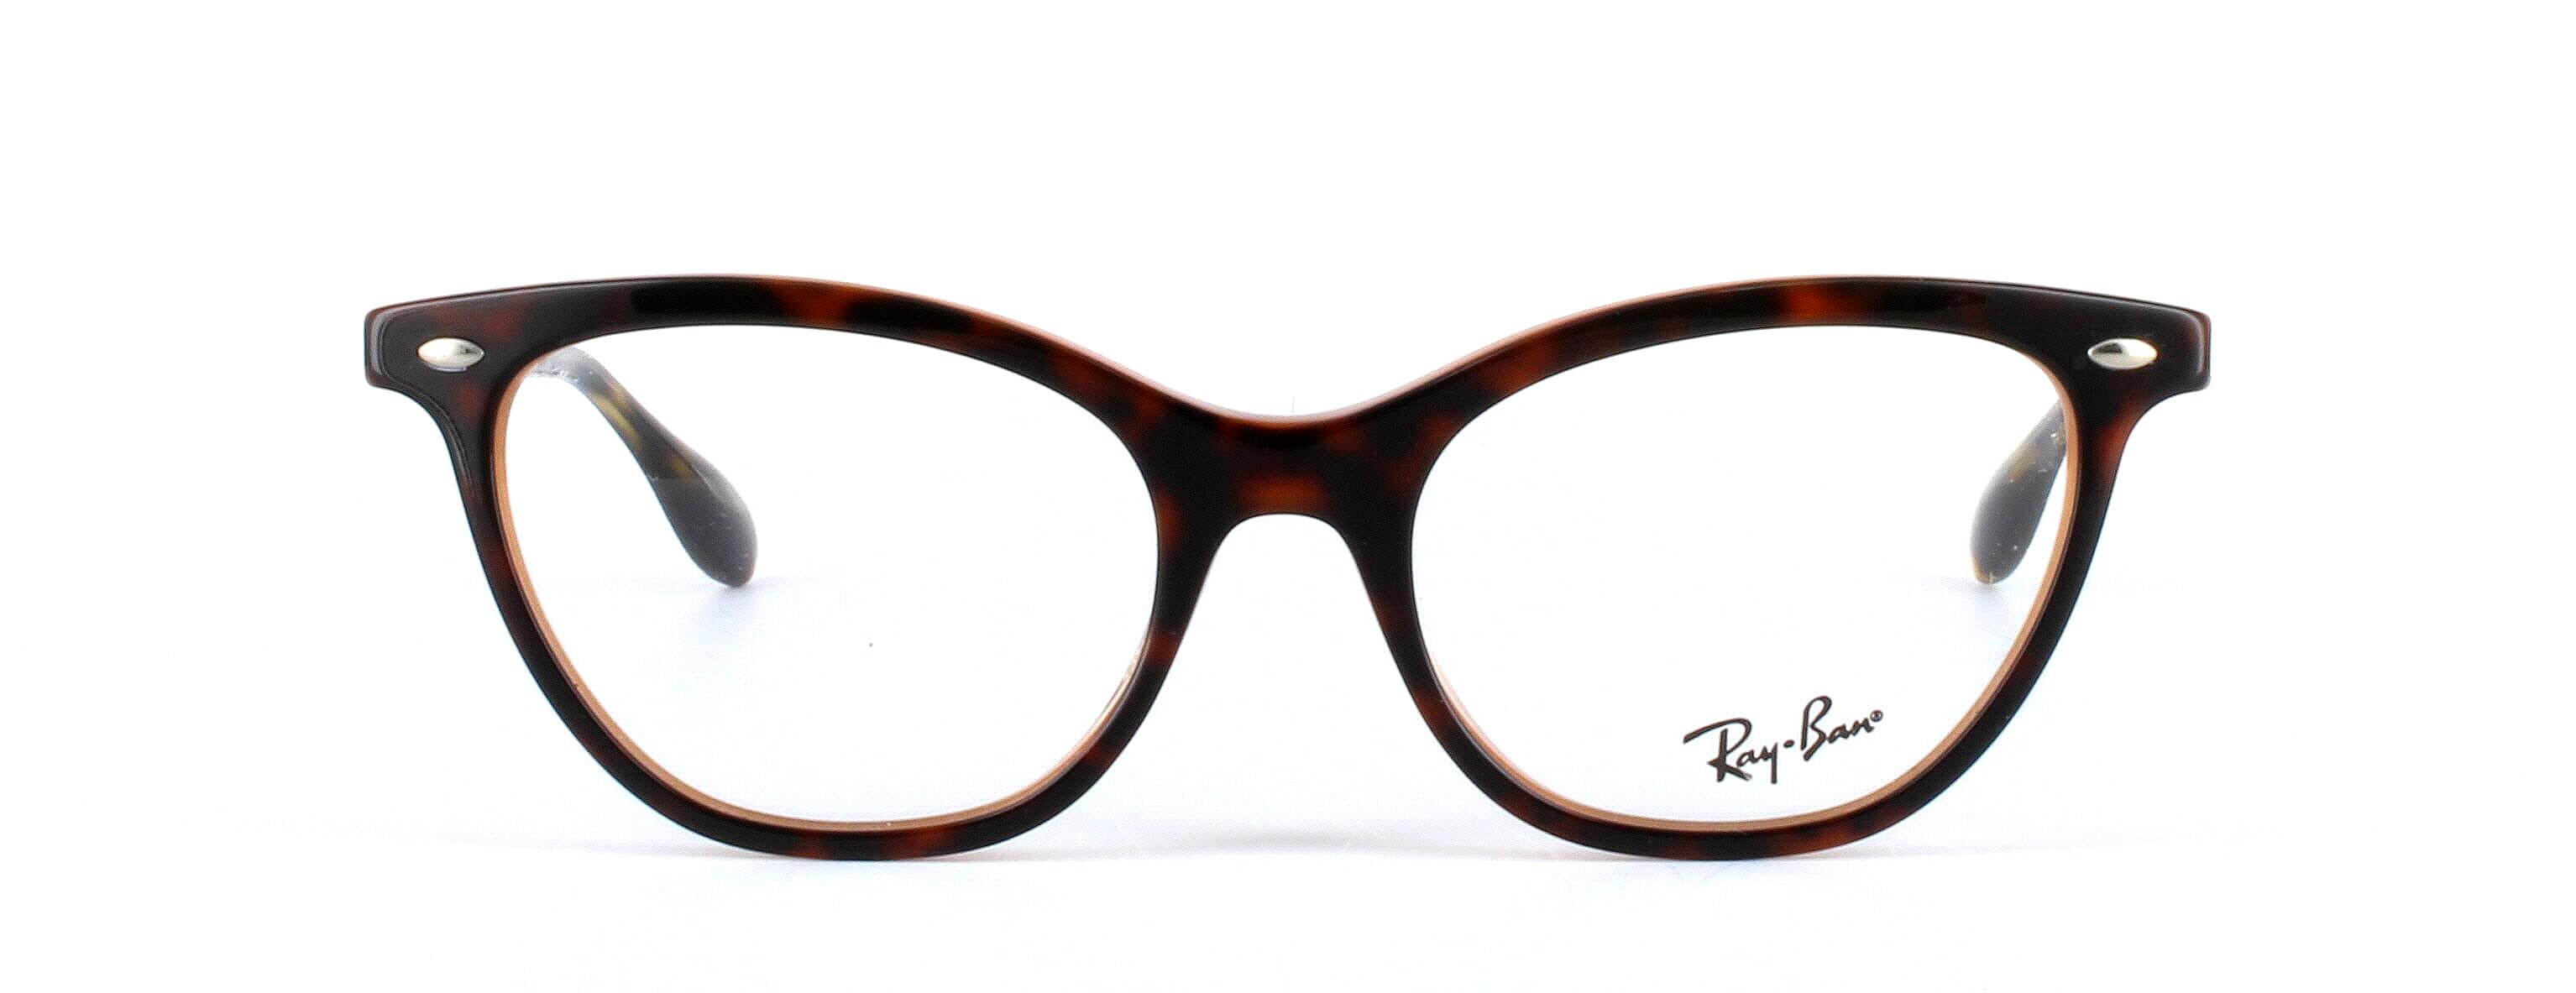 Ray Ban 5360 - Ladies acetate glasses - image view 5